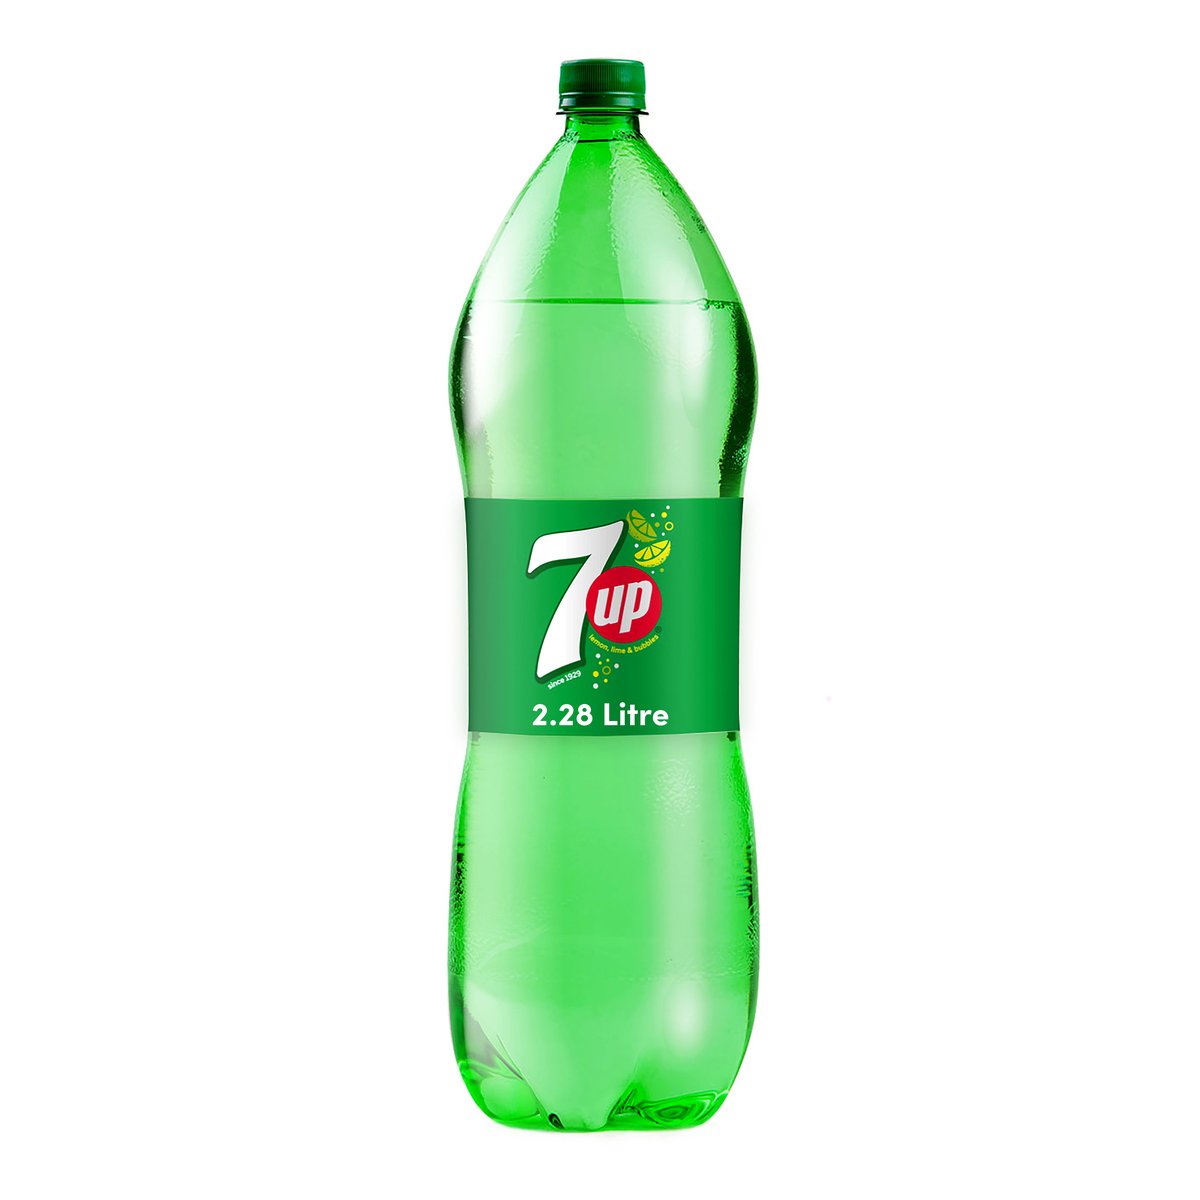 اشتري قم بشراء 7Up Carbonated Drink 2.28 Litres Online at Best Price من الموقع - من لولو هايبر ماركت Cola Bottle في الامارات